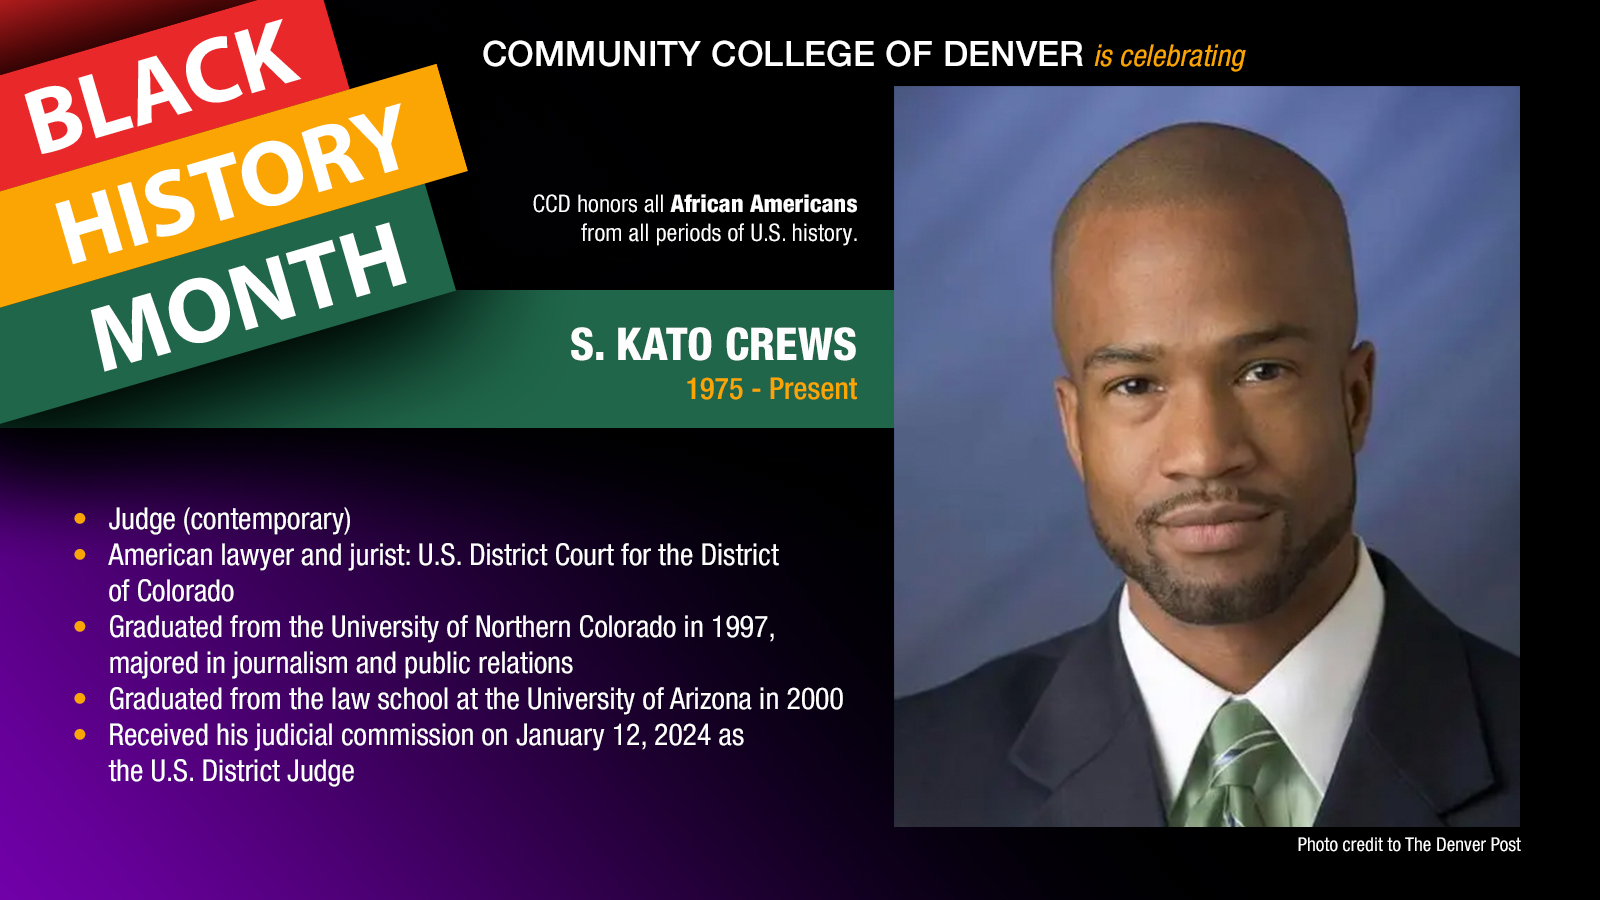 Black History Month. S. Kato Crews facts.